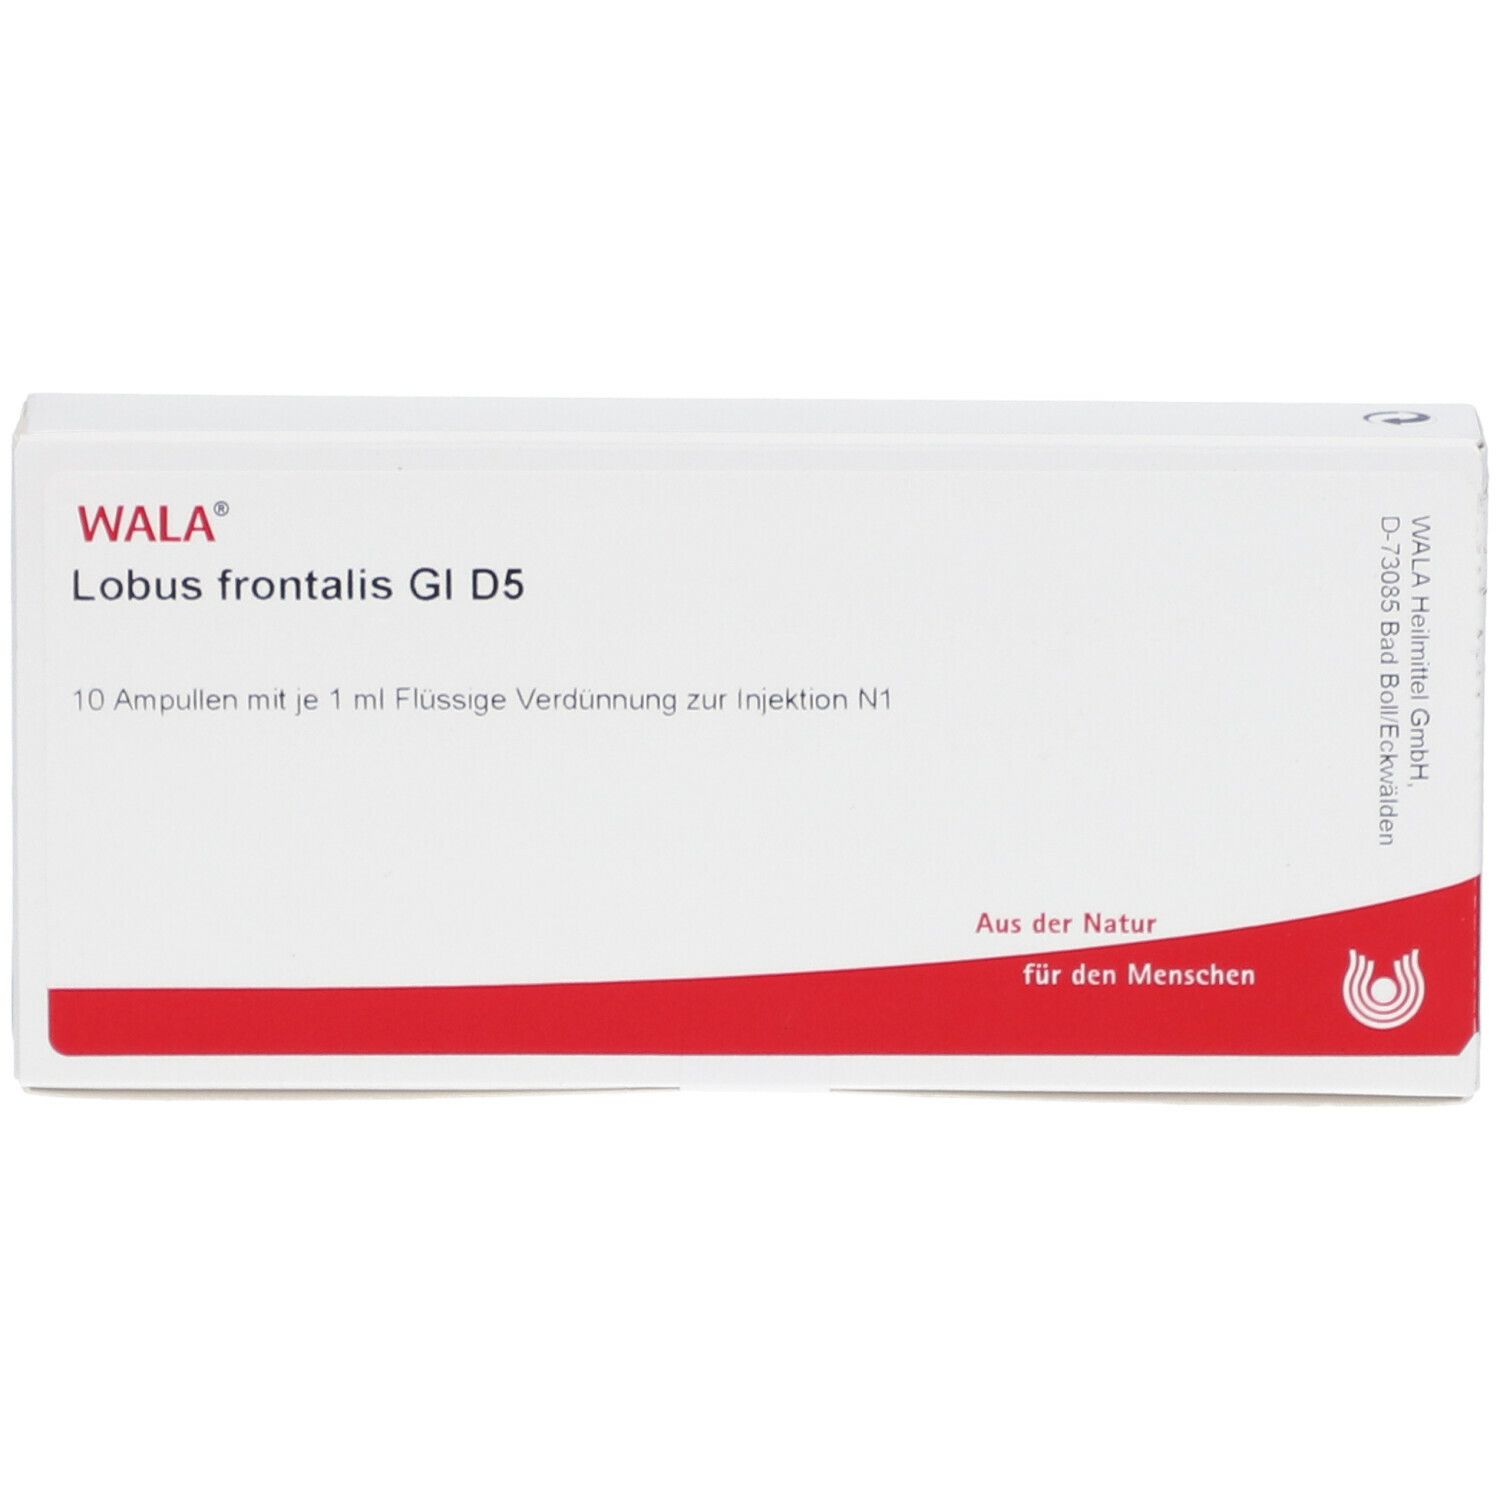 WALA® Lobus frontalis Gl D 5